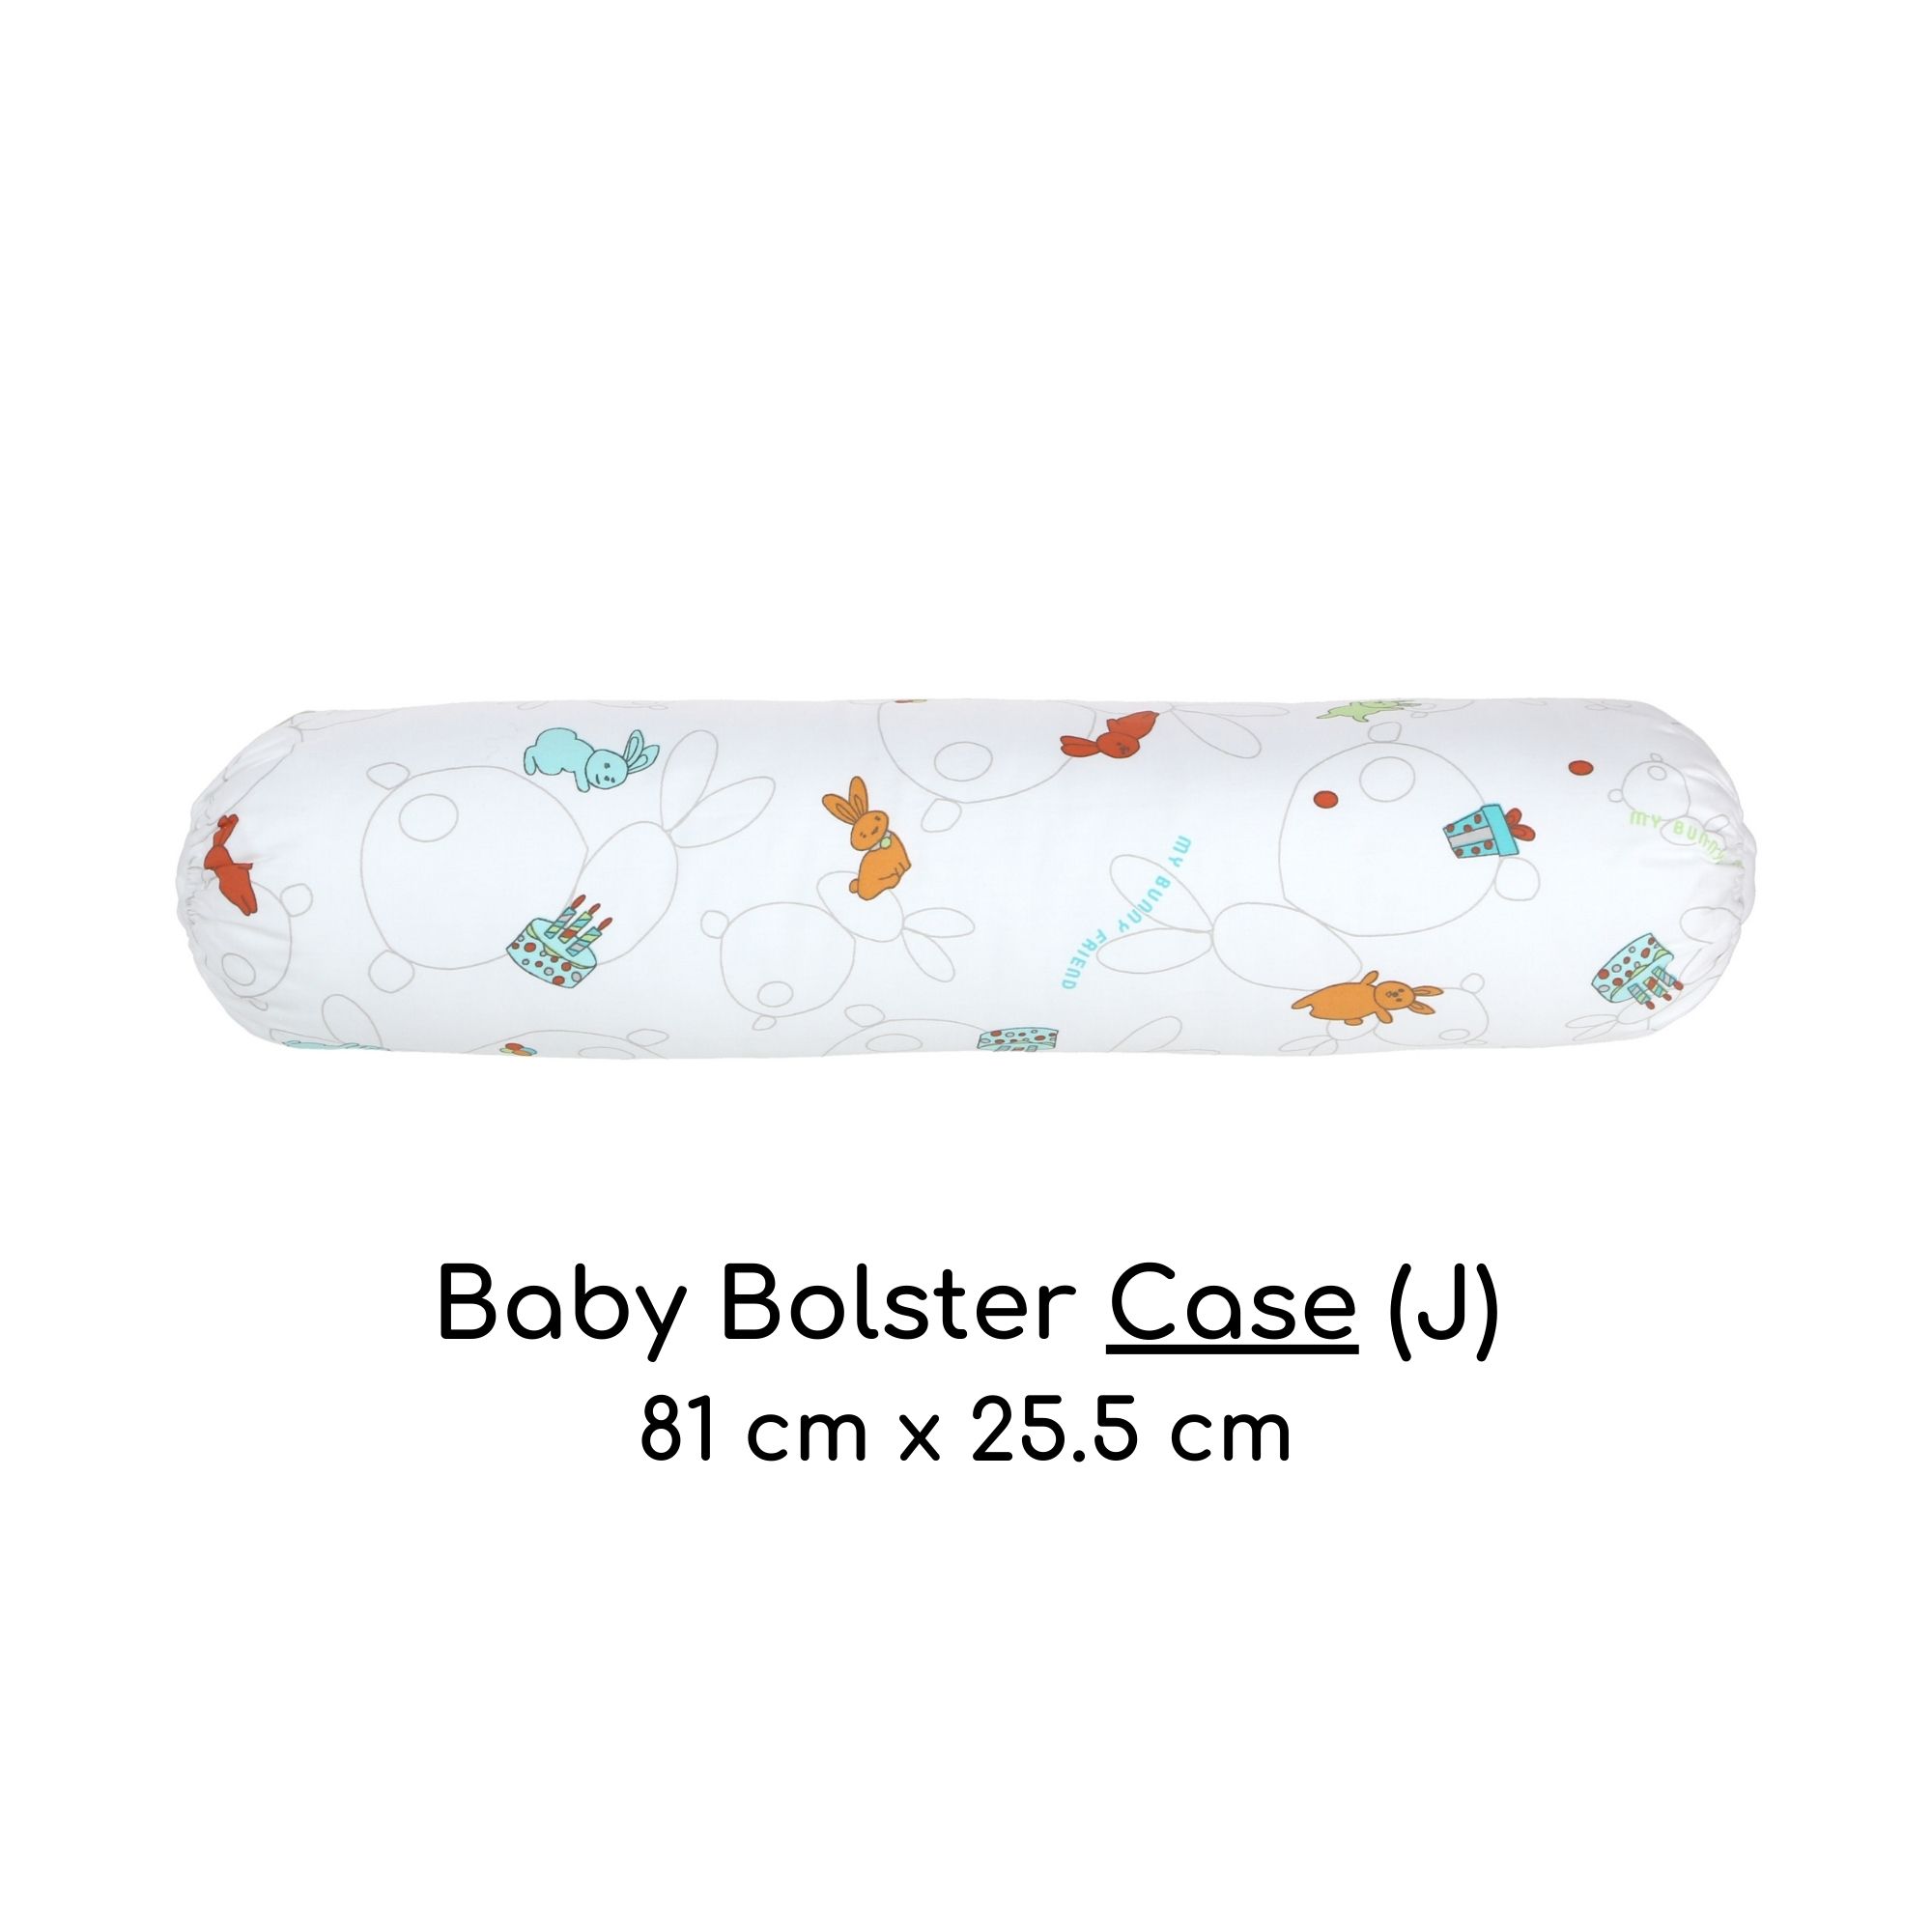 My Bunny Friend Baby Bolster Case (J) (25.5x81cm) - Bunny Party